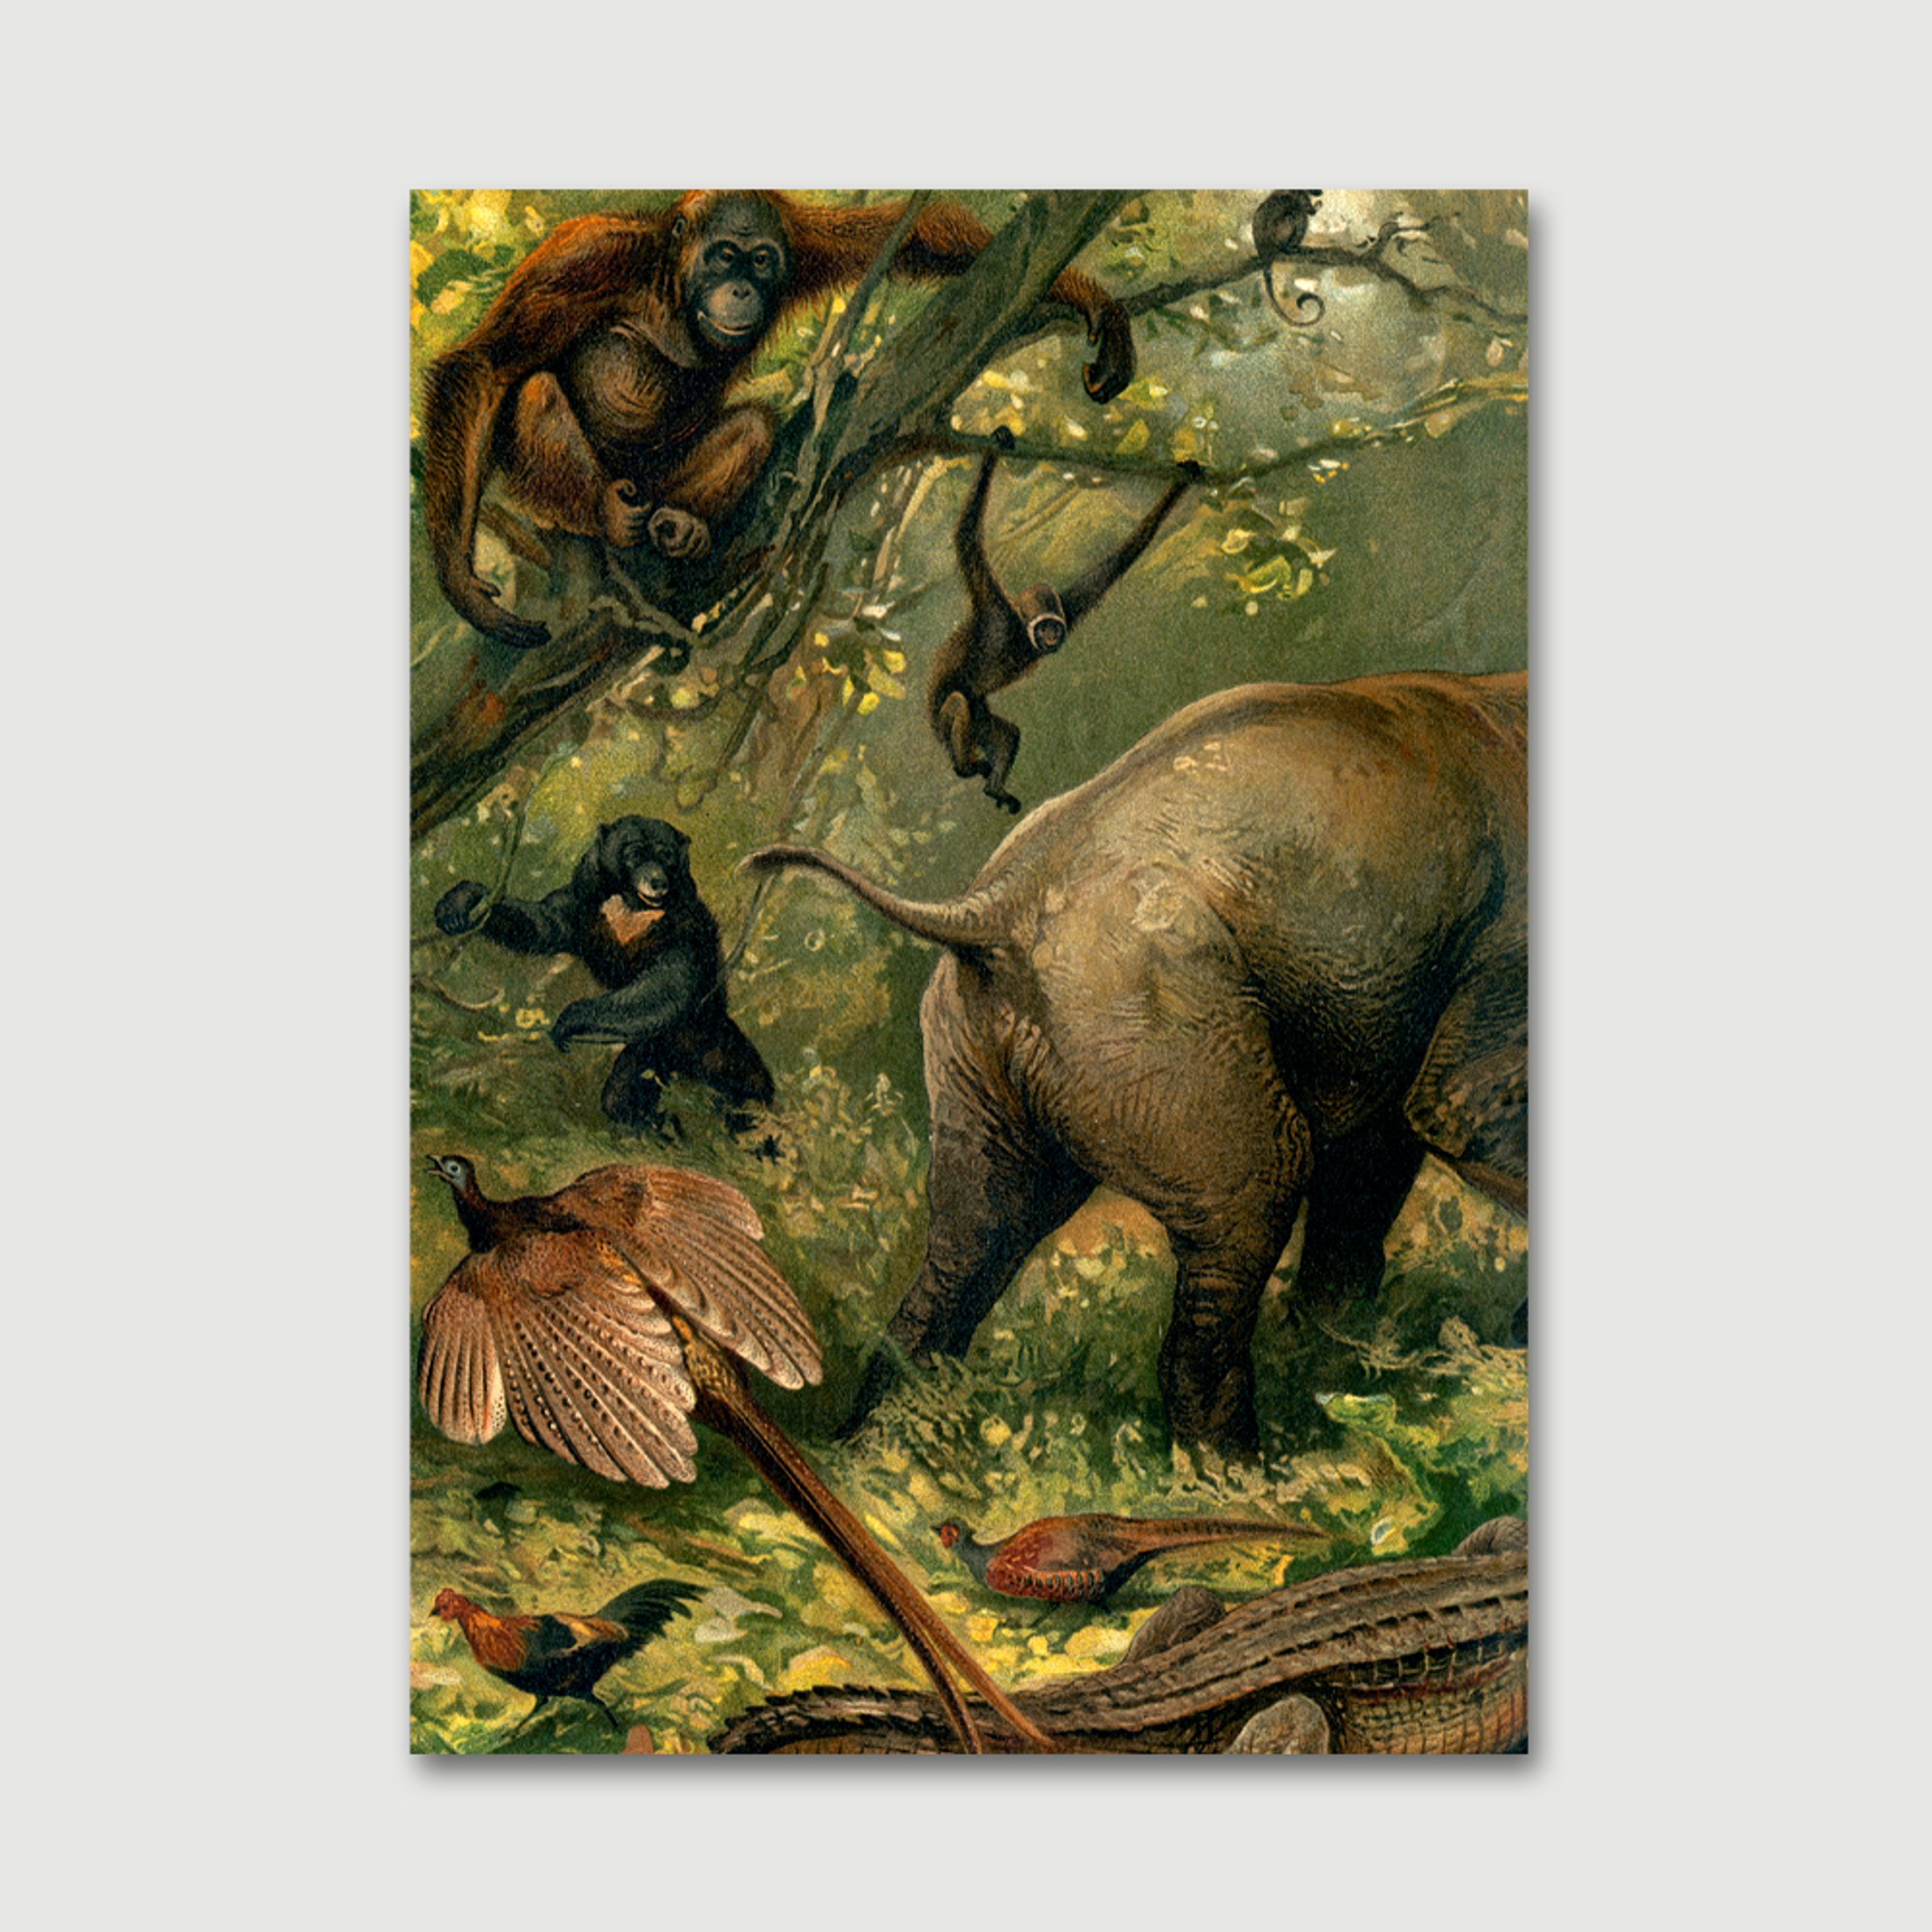 DYBDAHL Illustrated Encyclopedia - Oriental Fauna Left side  #2911L